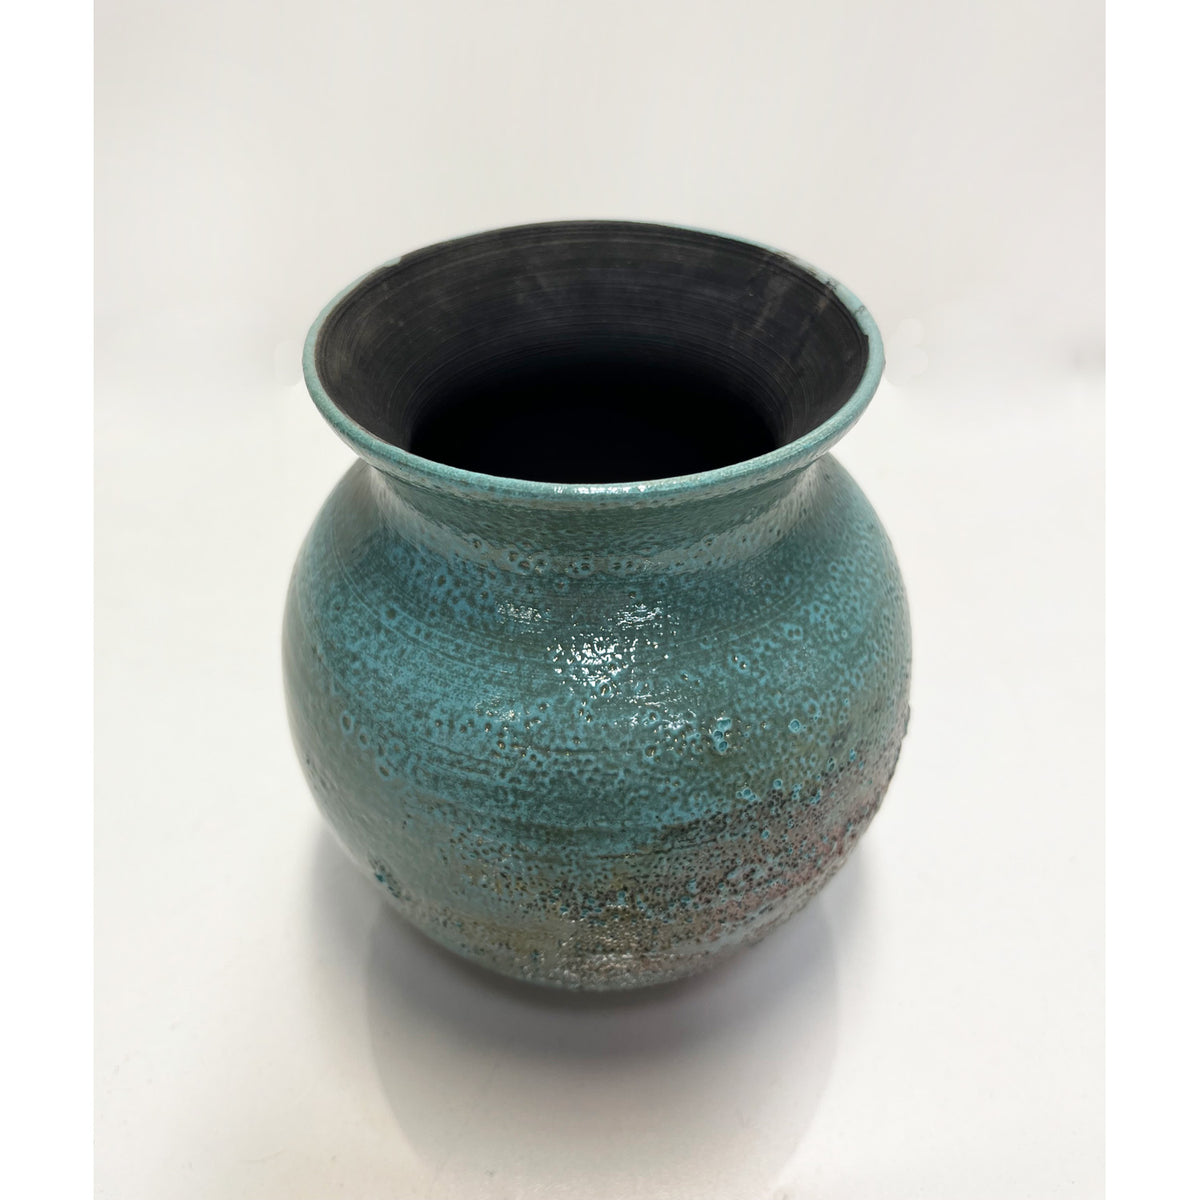 Catherine Harasymiw - Round Green Vase, 5.5" x 4.5" x 4.5"